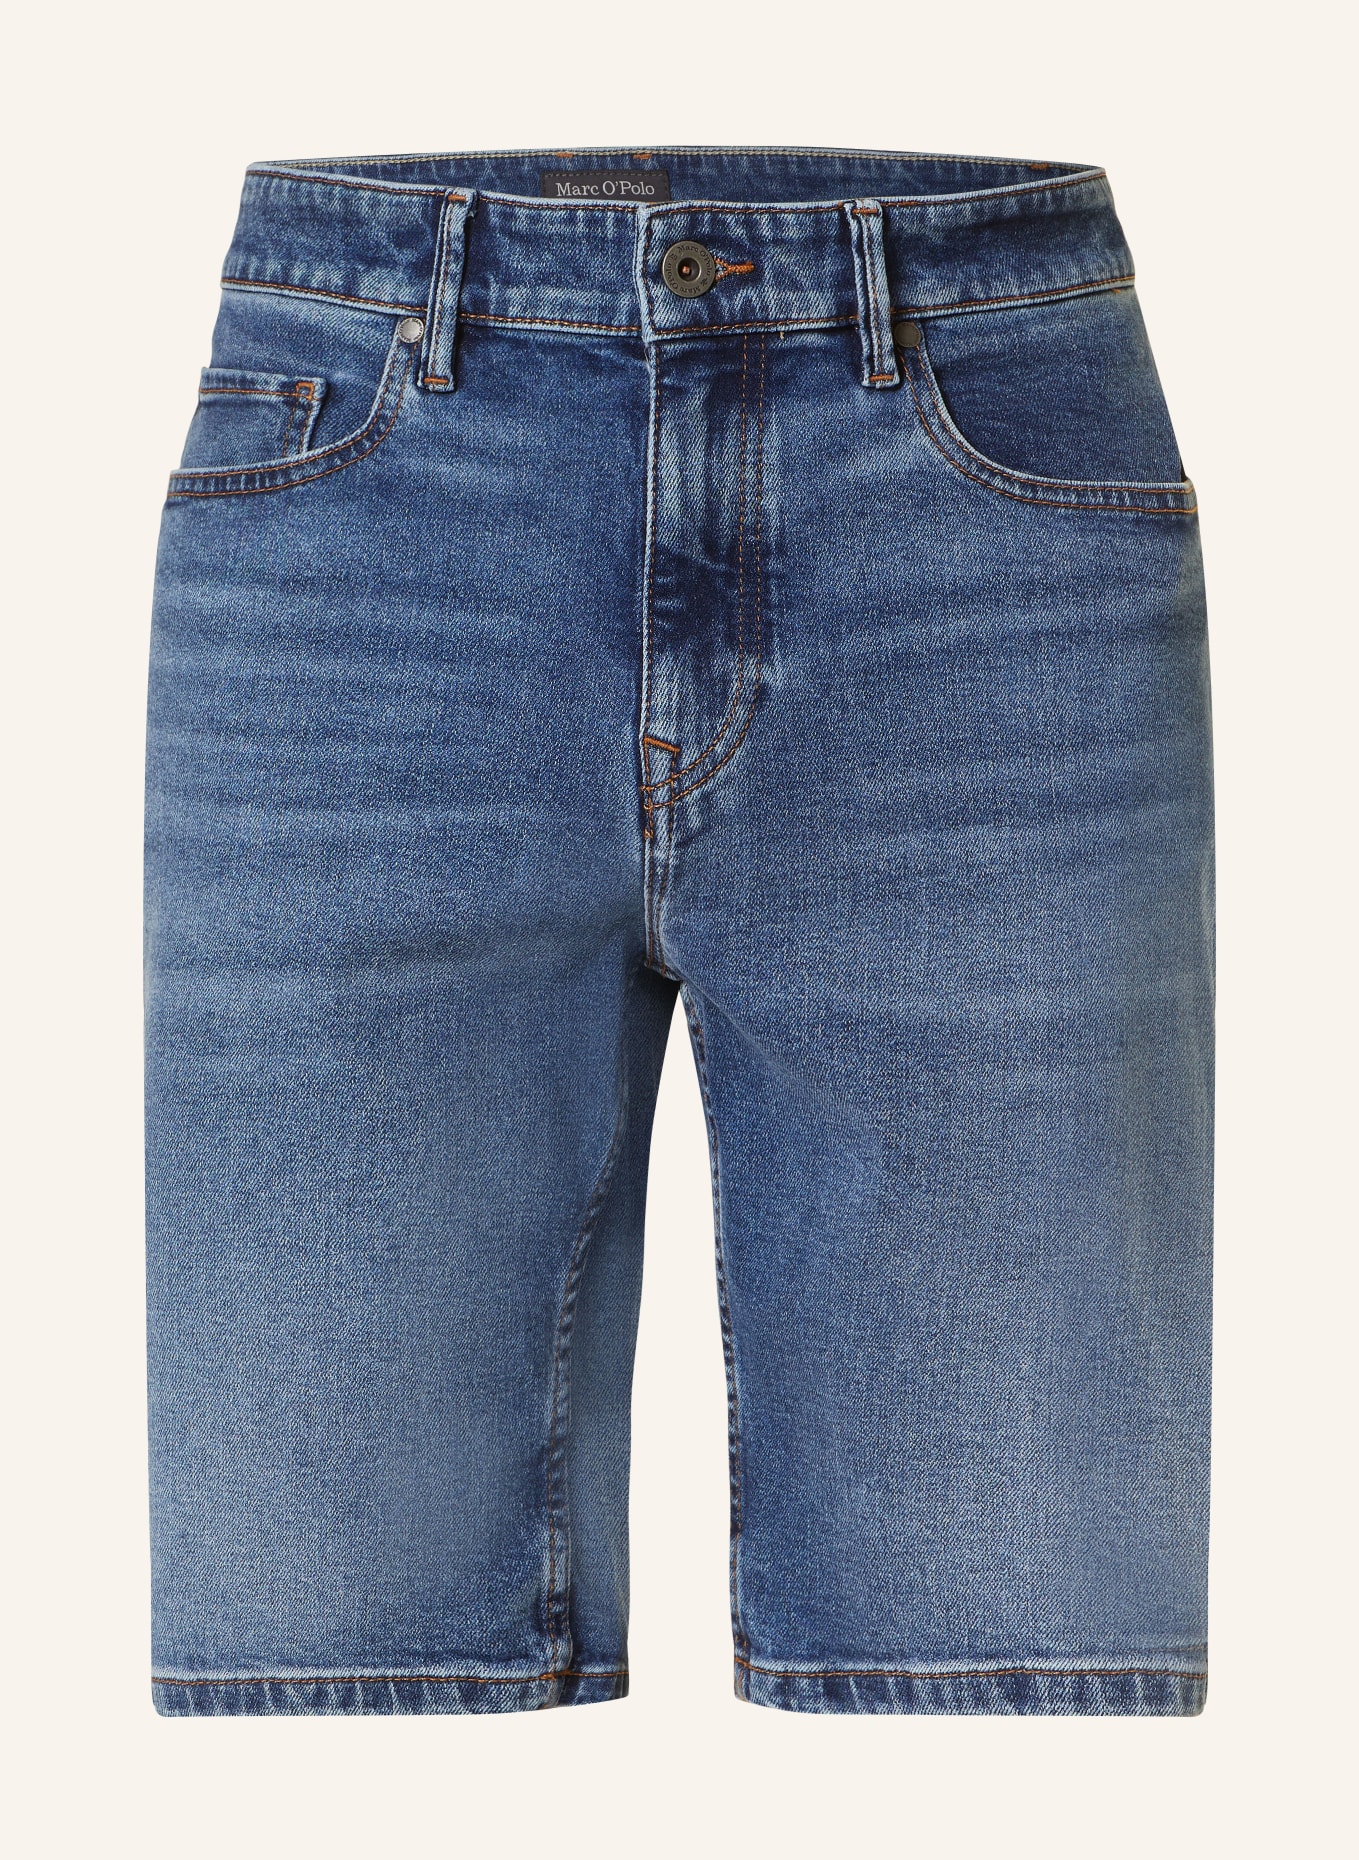 Marc O'Polo Jeansshorts Regular Fit, Farbe: 038 Retro blue wash (Bild 1)